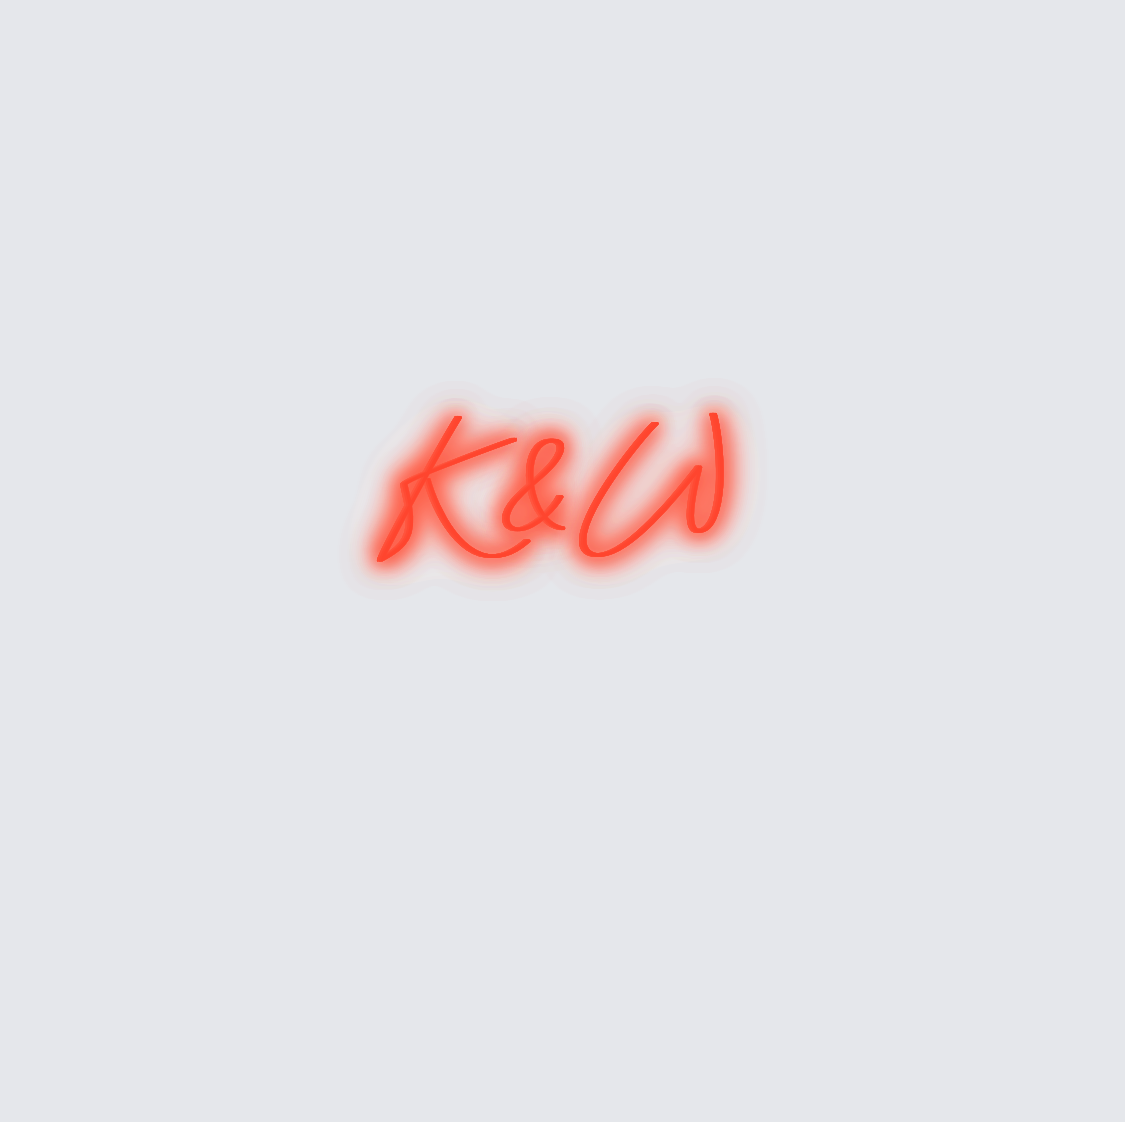 Custom neon sign - K&W